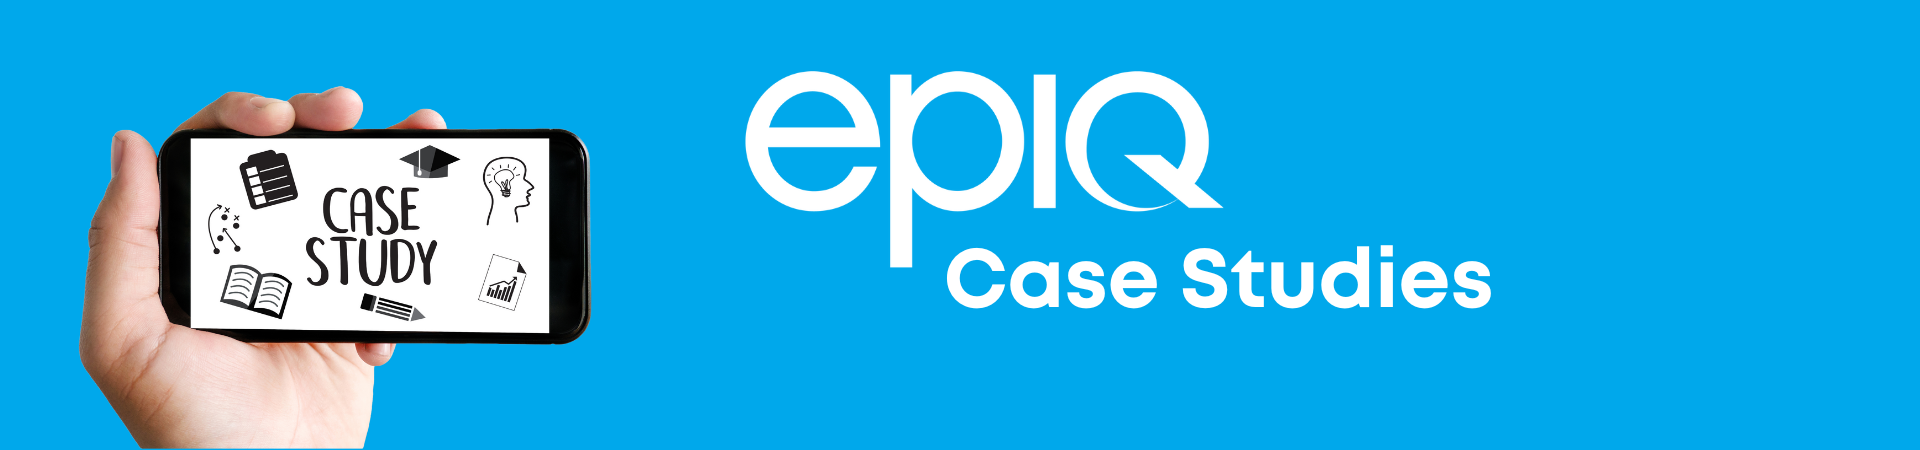 Epiq Case Studies Header